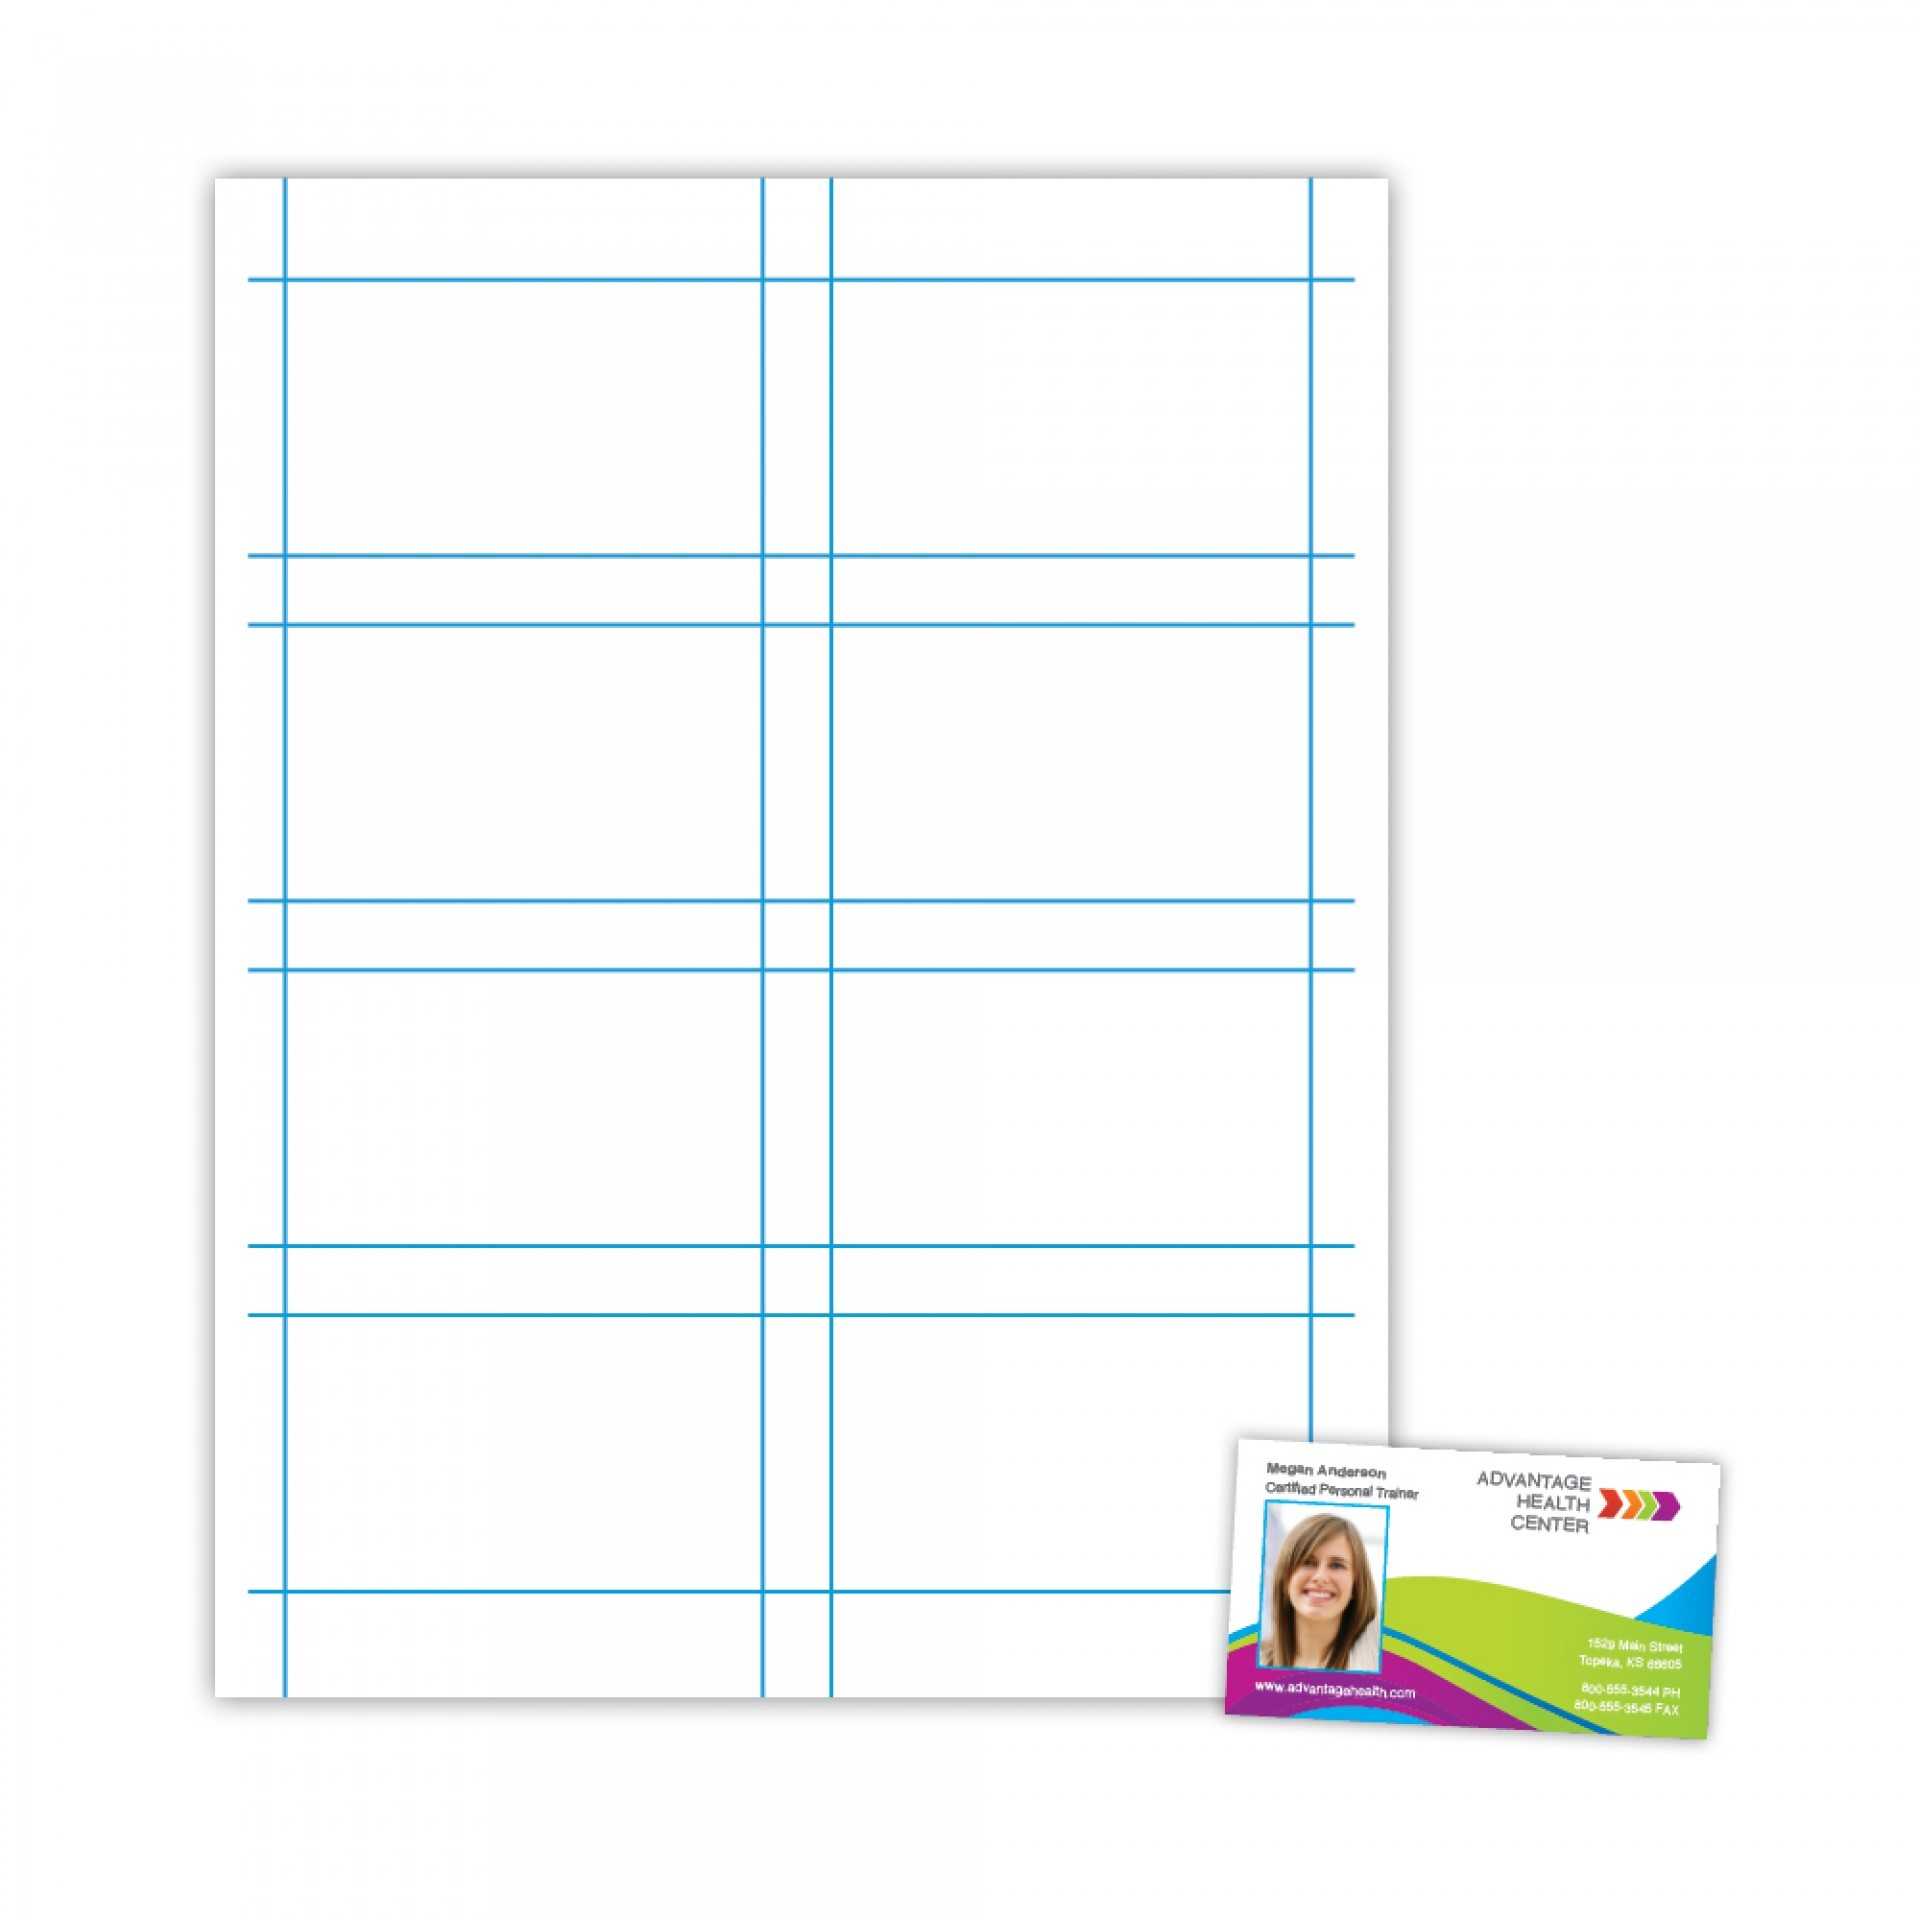 025 Plain Business Card Template Blank Microsoft Word Free With Regard To Plain Business Card Template Microsoft Word